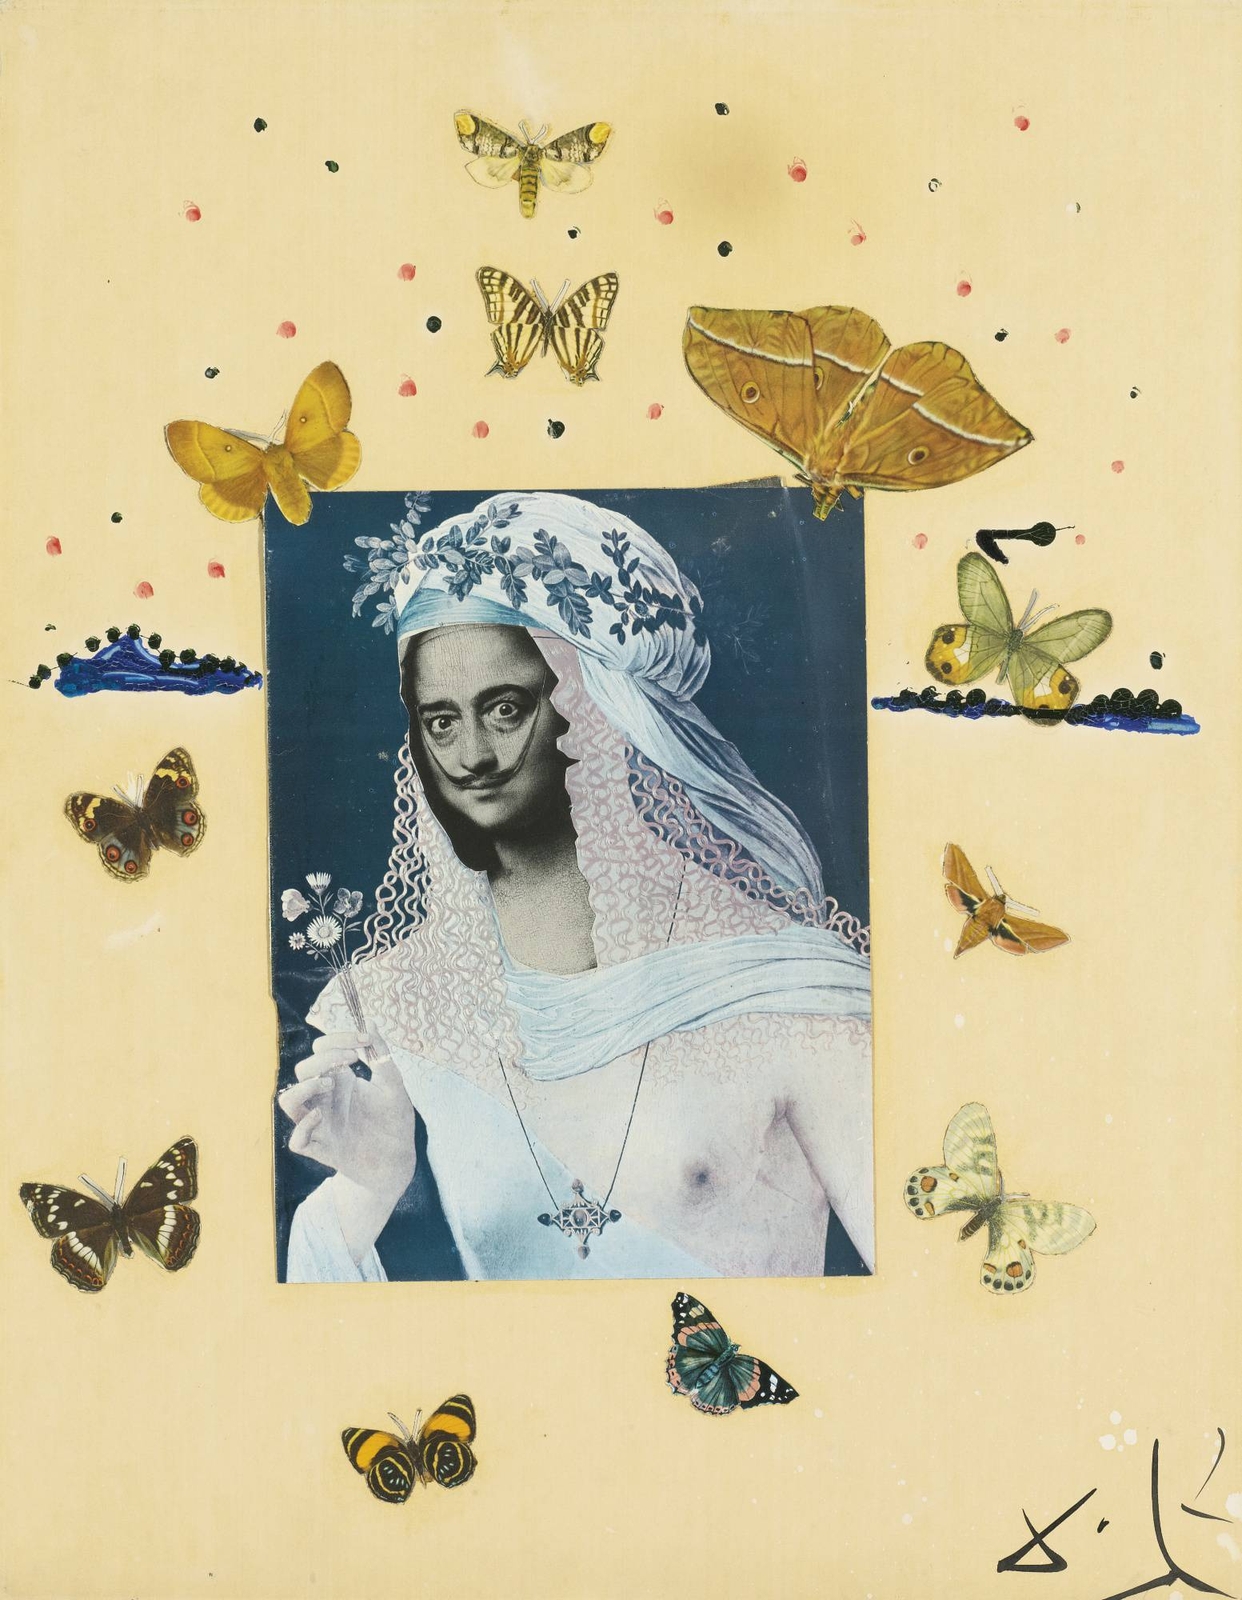 Salvador+Dali-1904-1989 (300).jpg